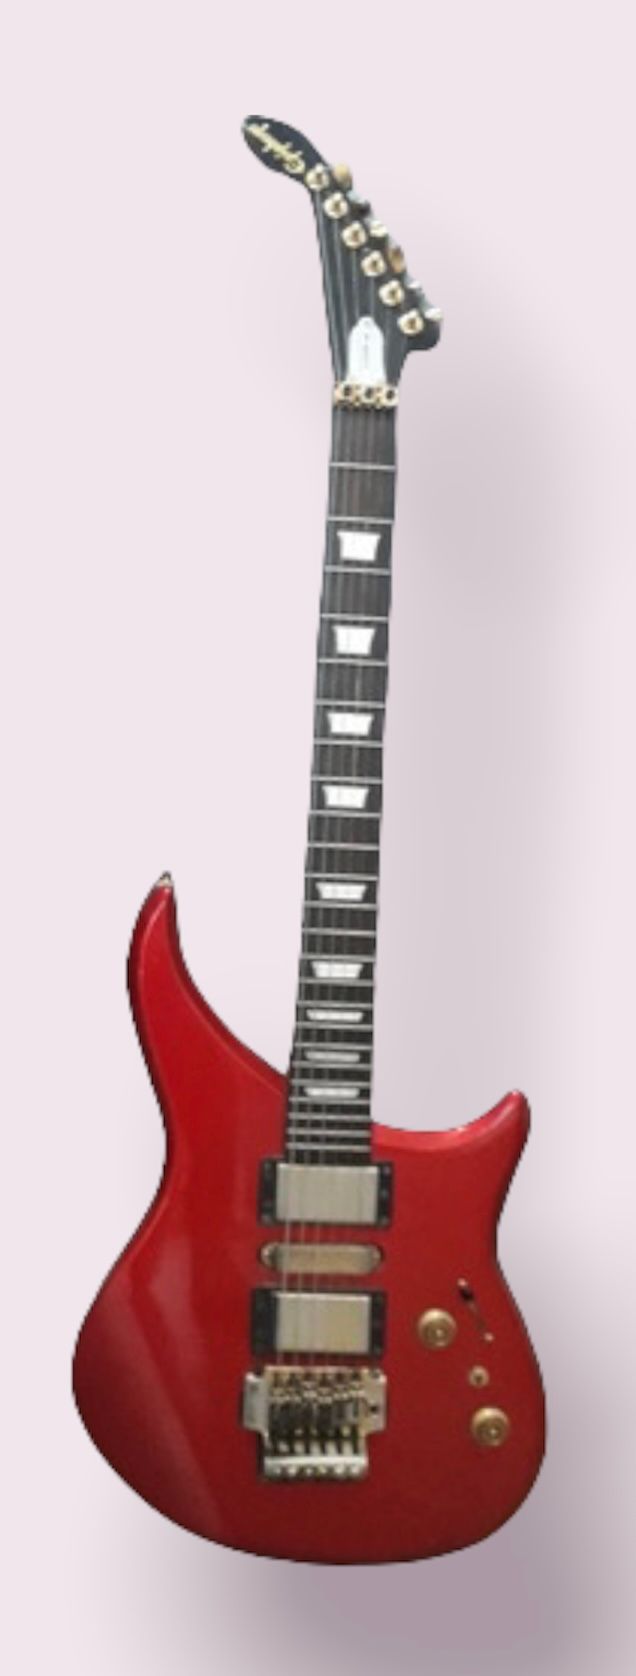 Null * CHITARRA ELETTRICA, EPIPHONE, tipo Stratocaster

Rosso, n° S2030011

Con &hellip;